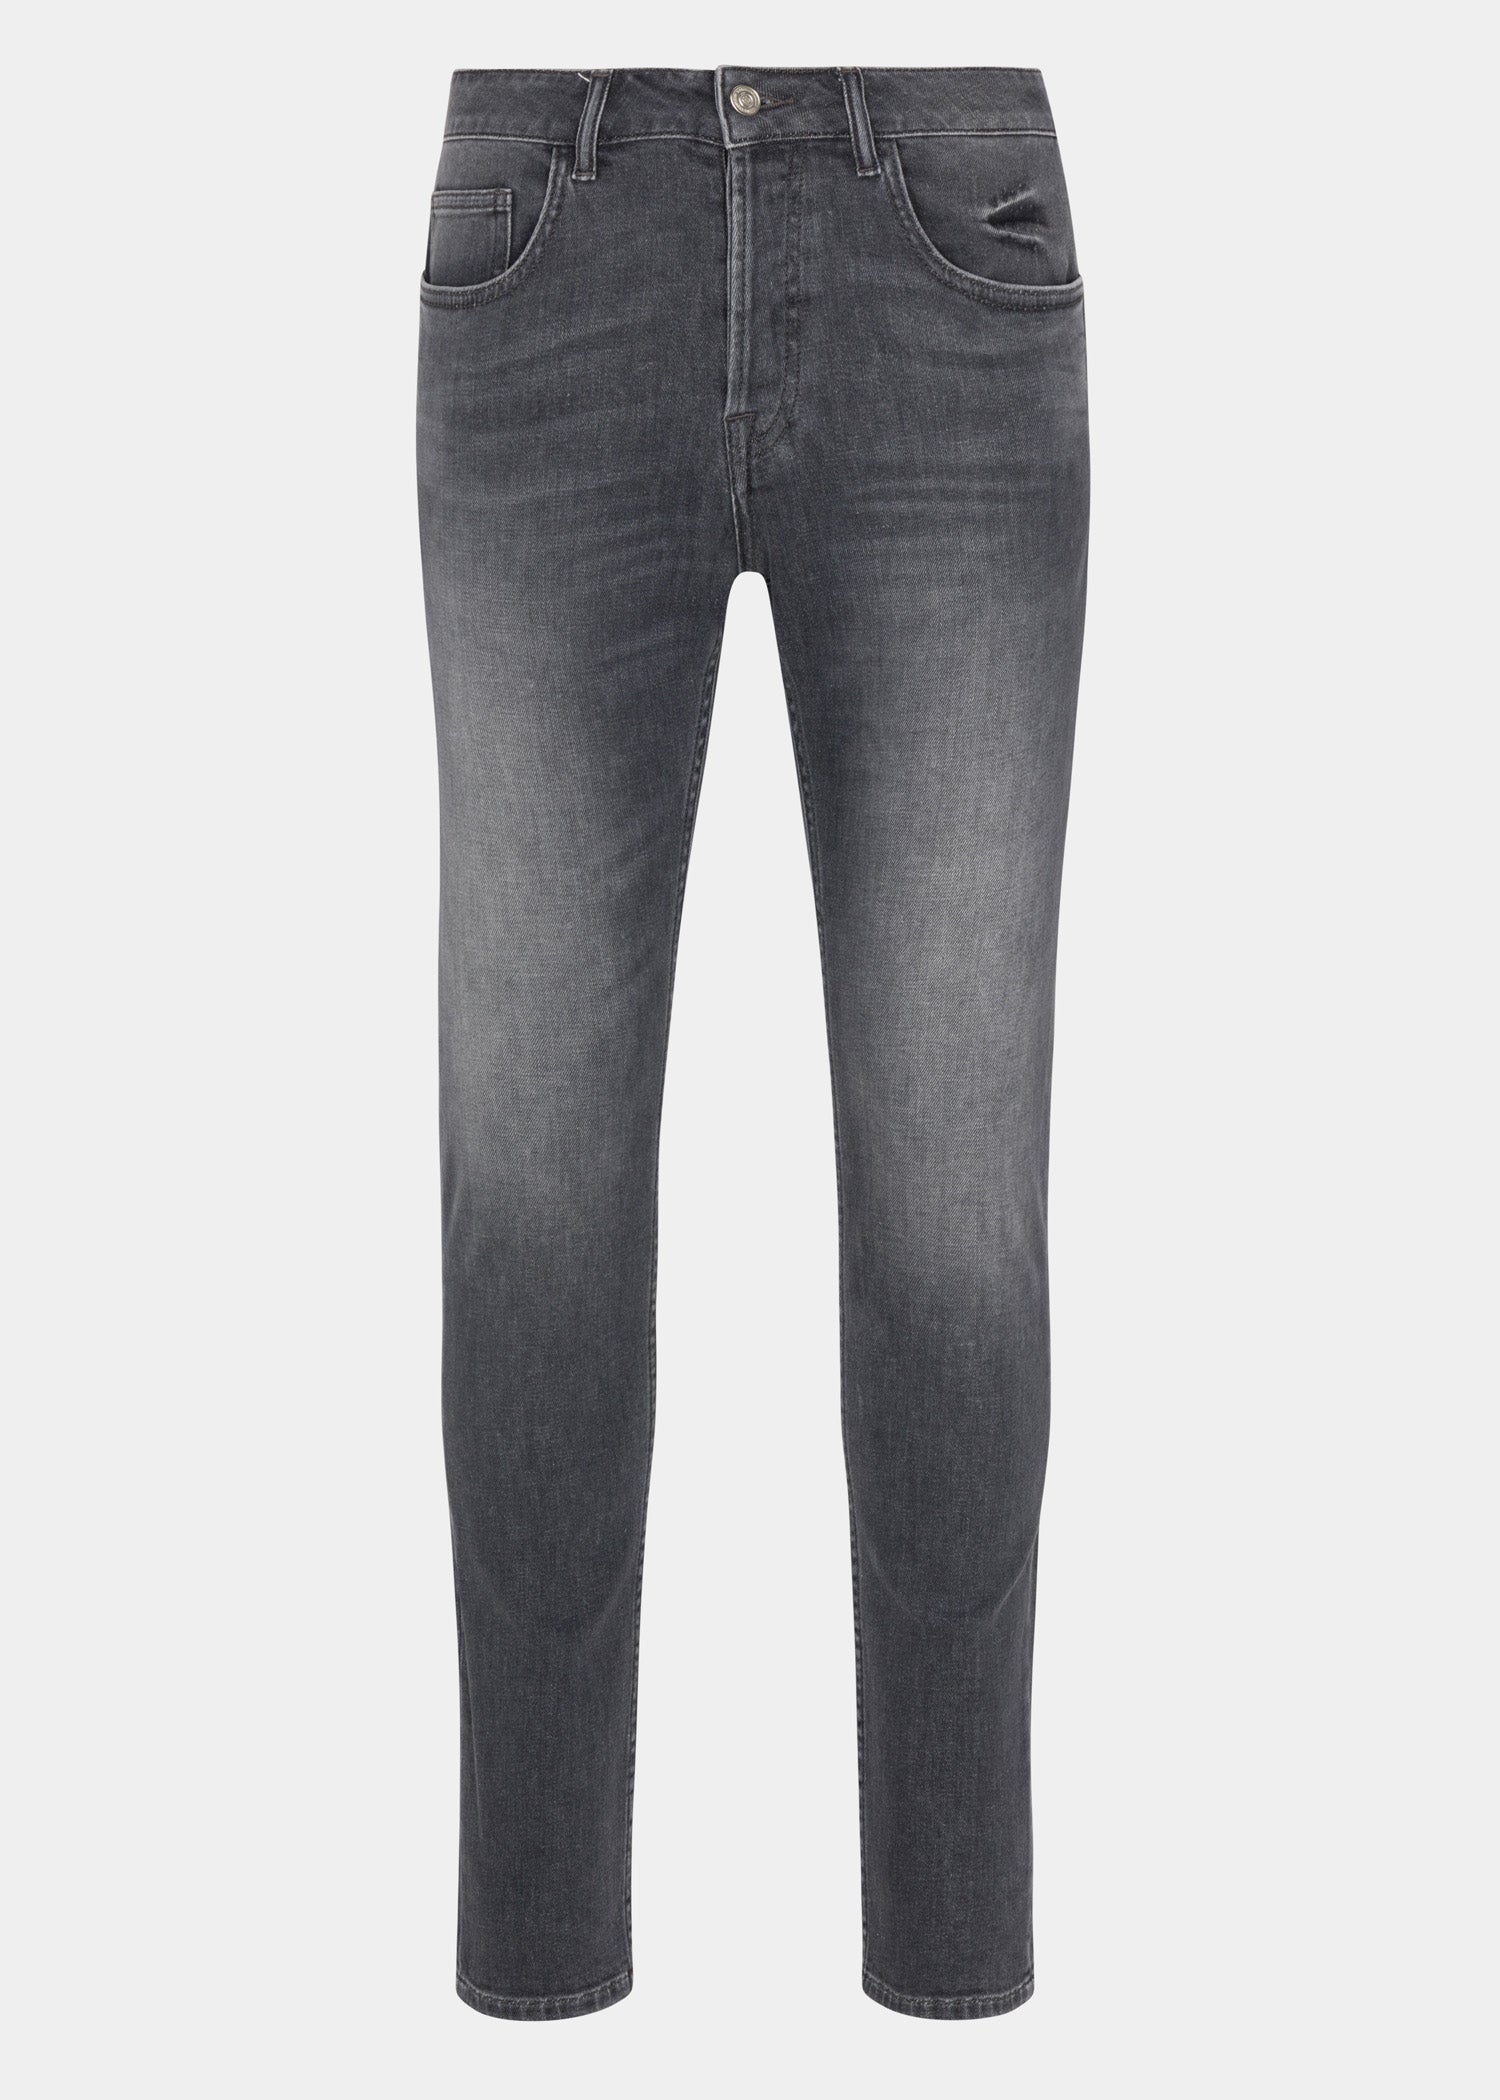 Grey Distressed Jeans Skinny Fit